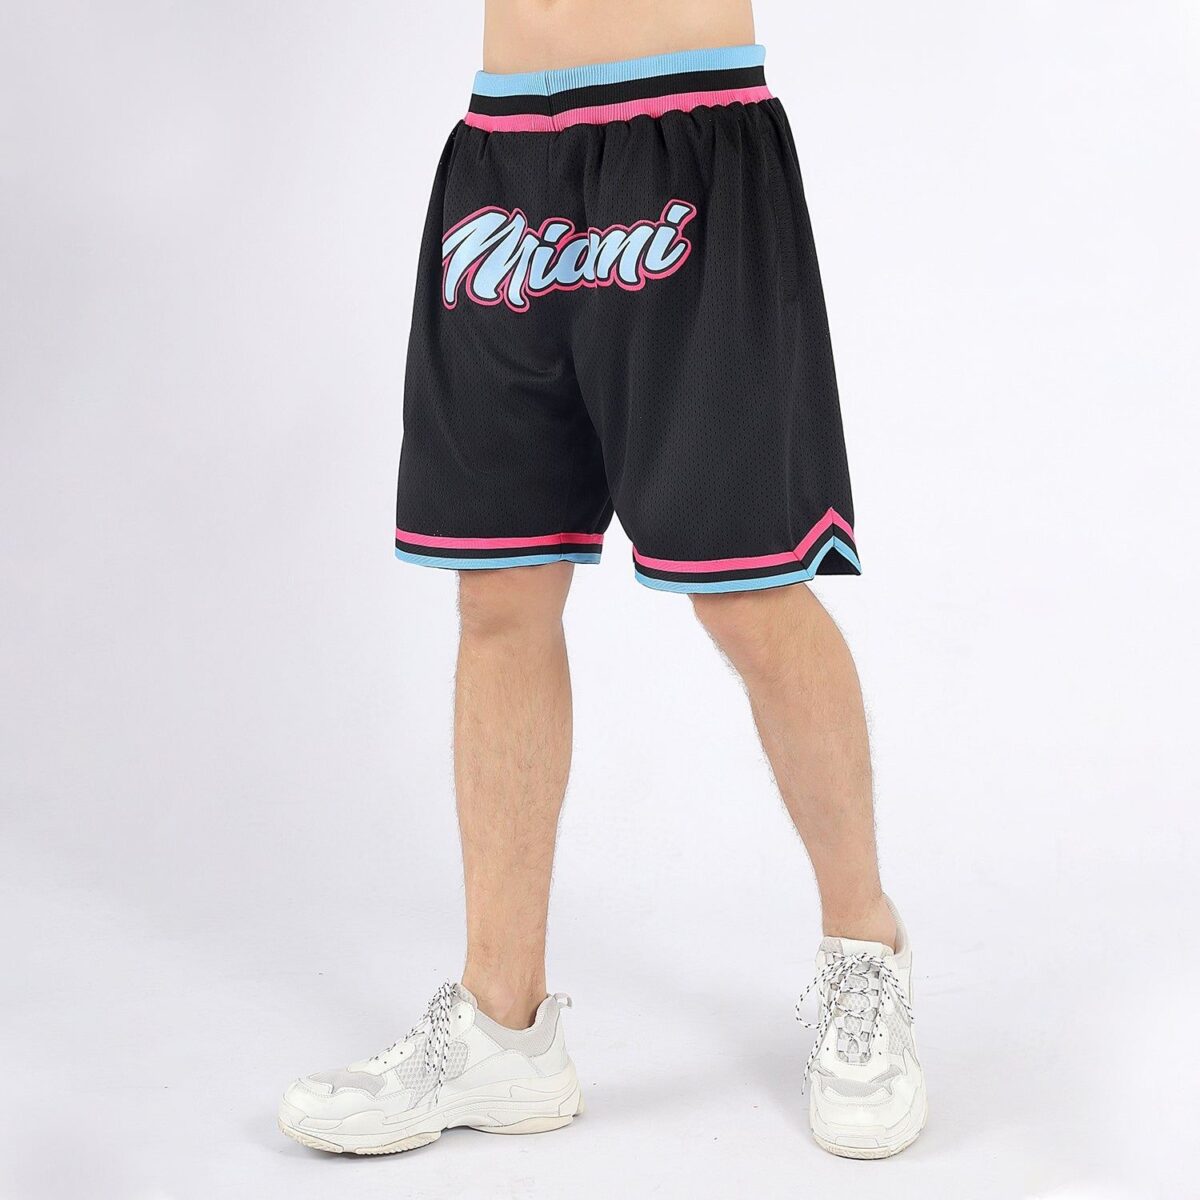 Black & Pink Color Basketball Shorts 3